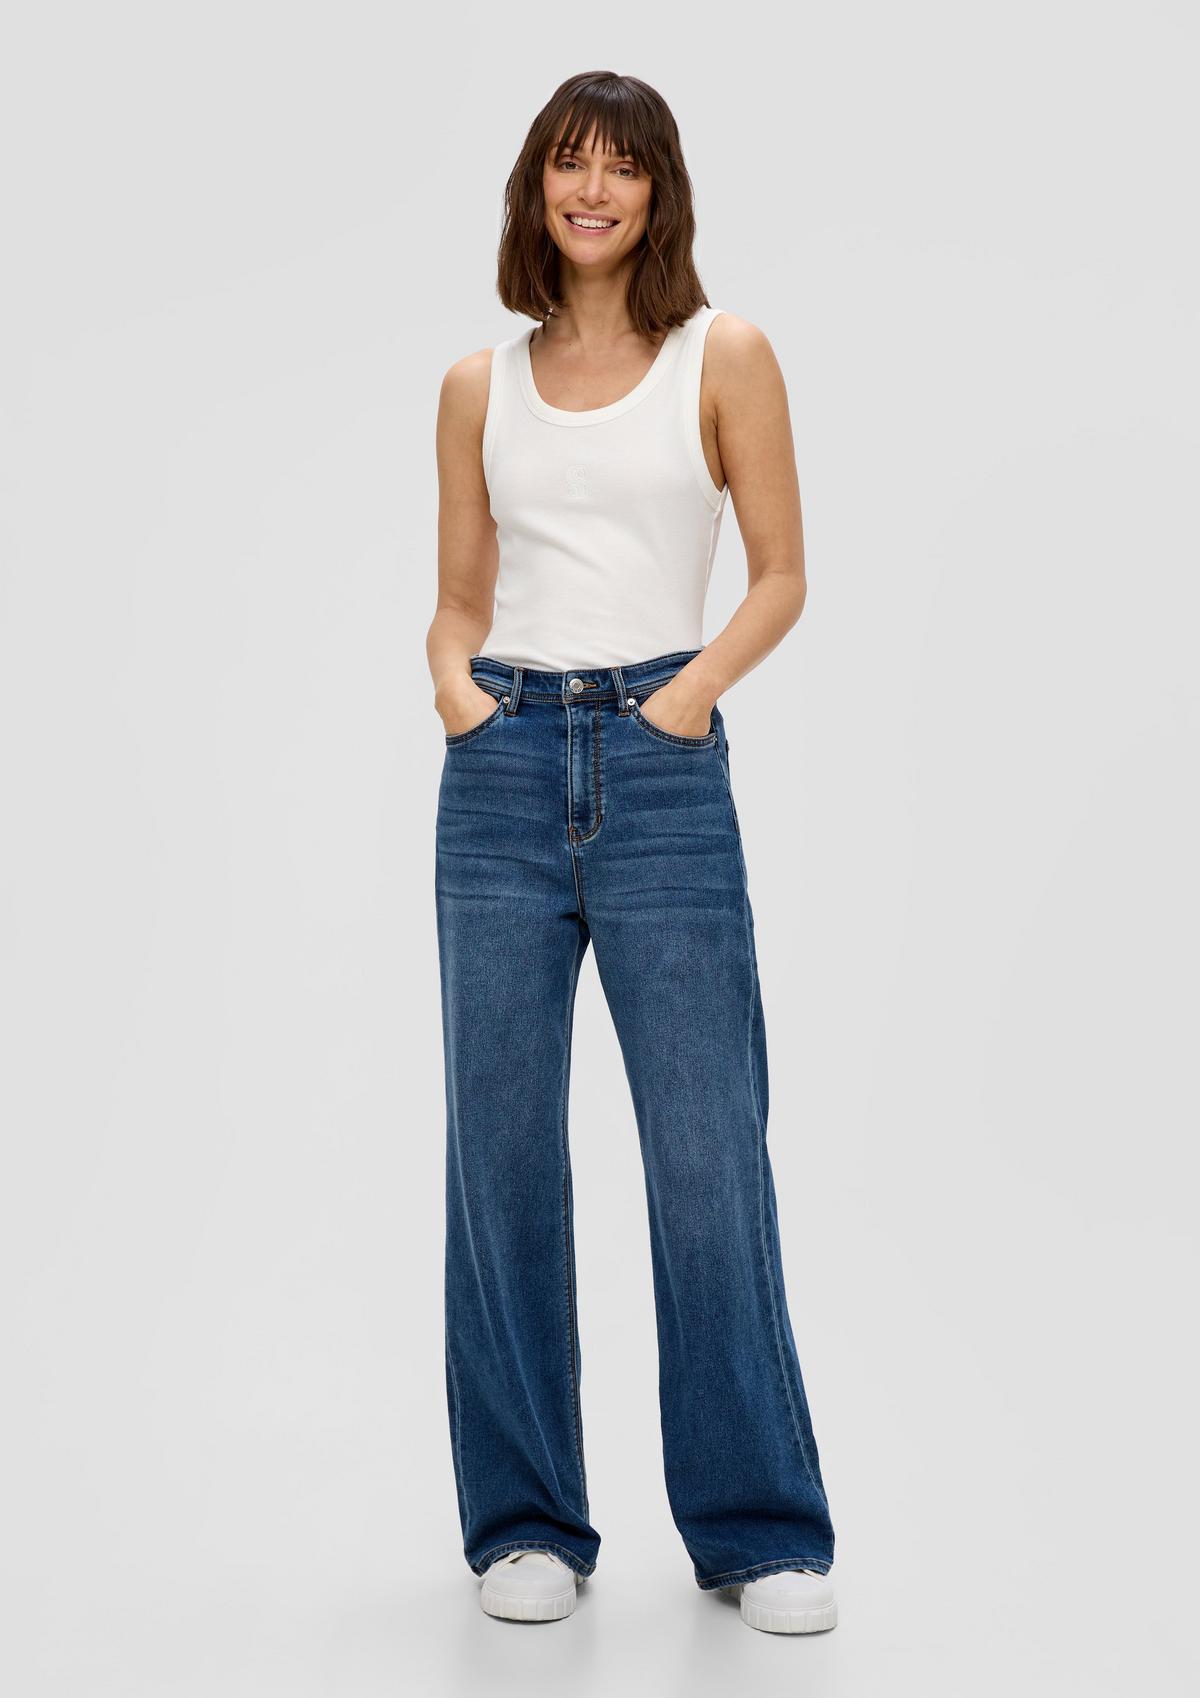 Suri Jeans / regular fit / high rise / wide leg / cotton blend